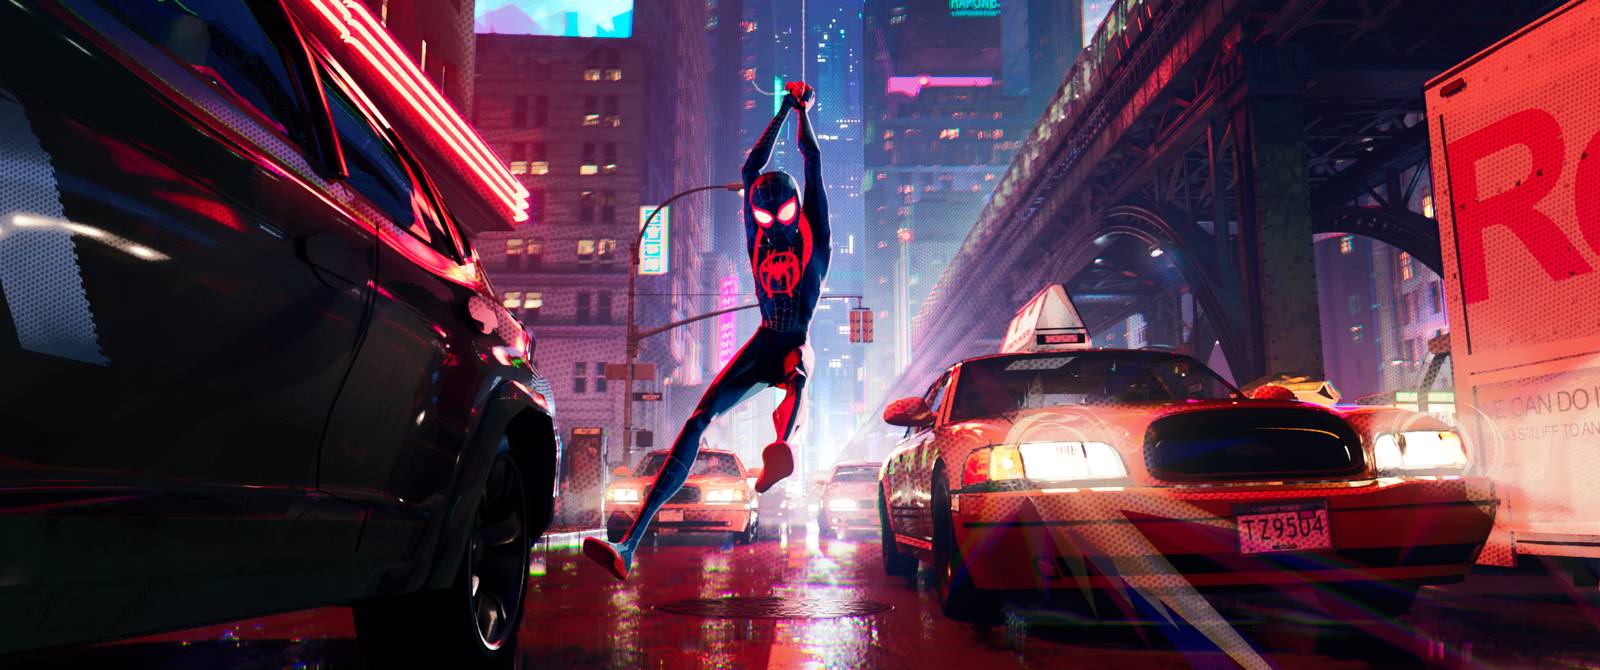 Spider-Man: Paralelné svety (2018) - fotografie